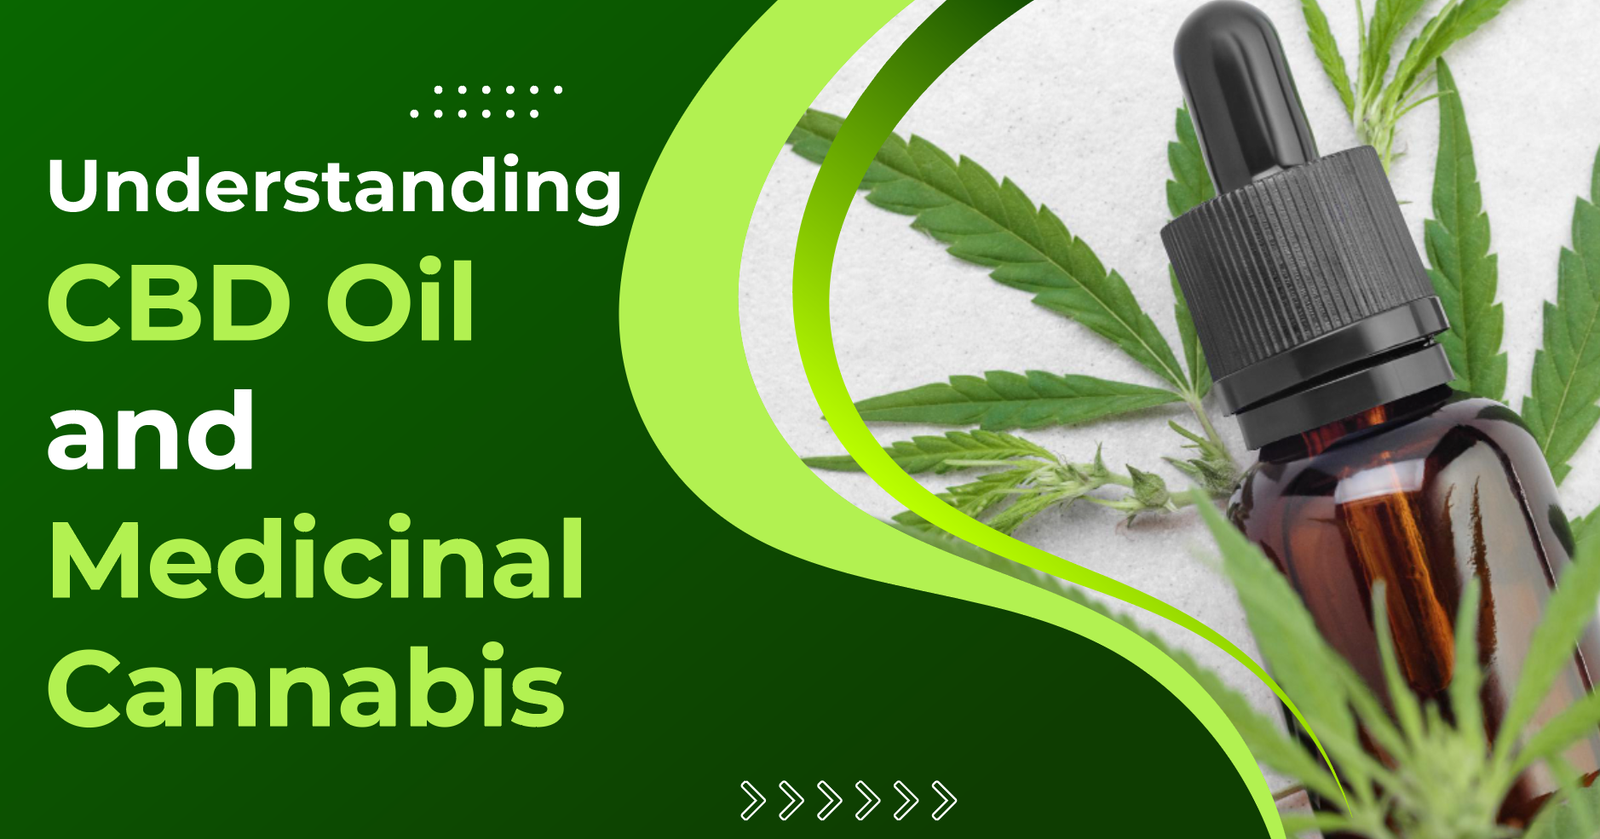 CBD oil and medicinal cannabis